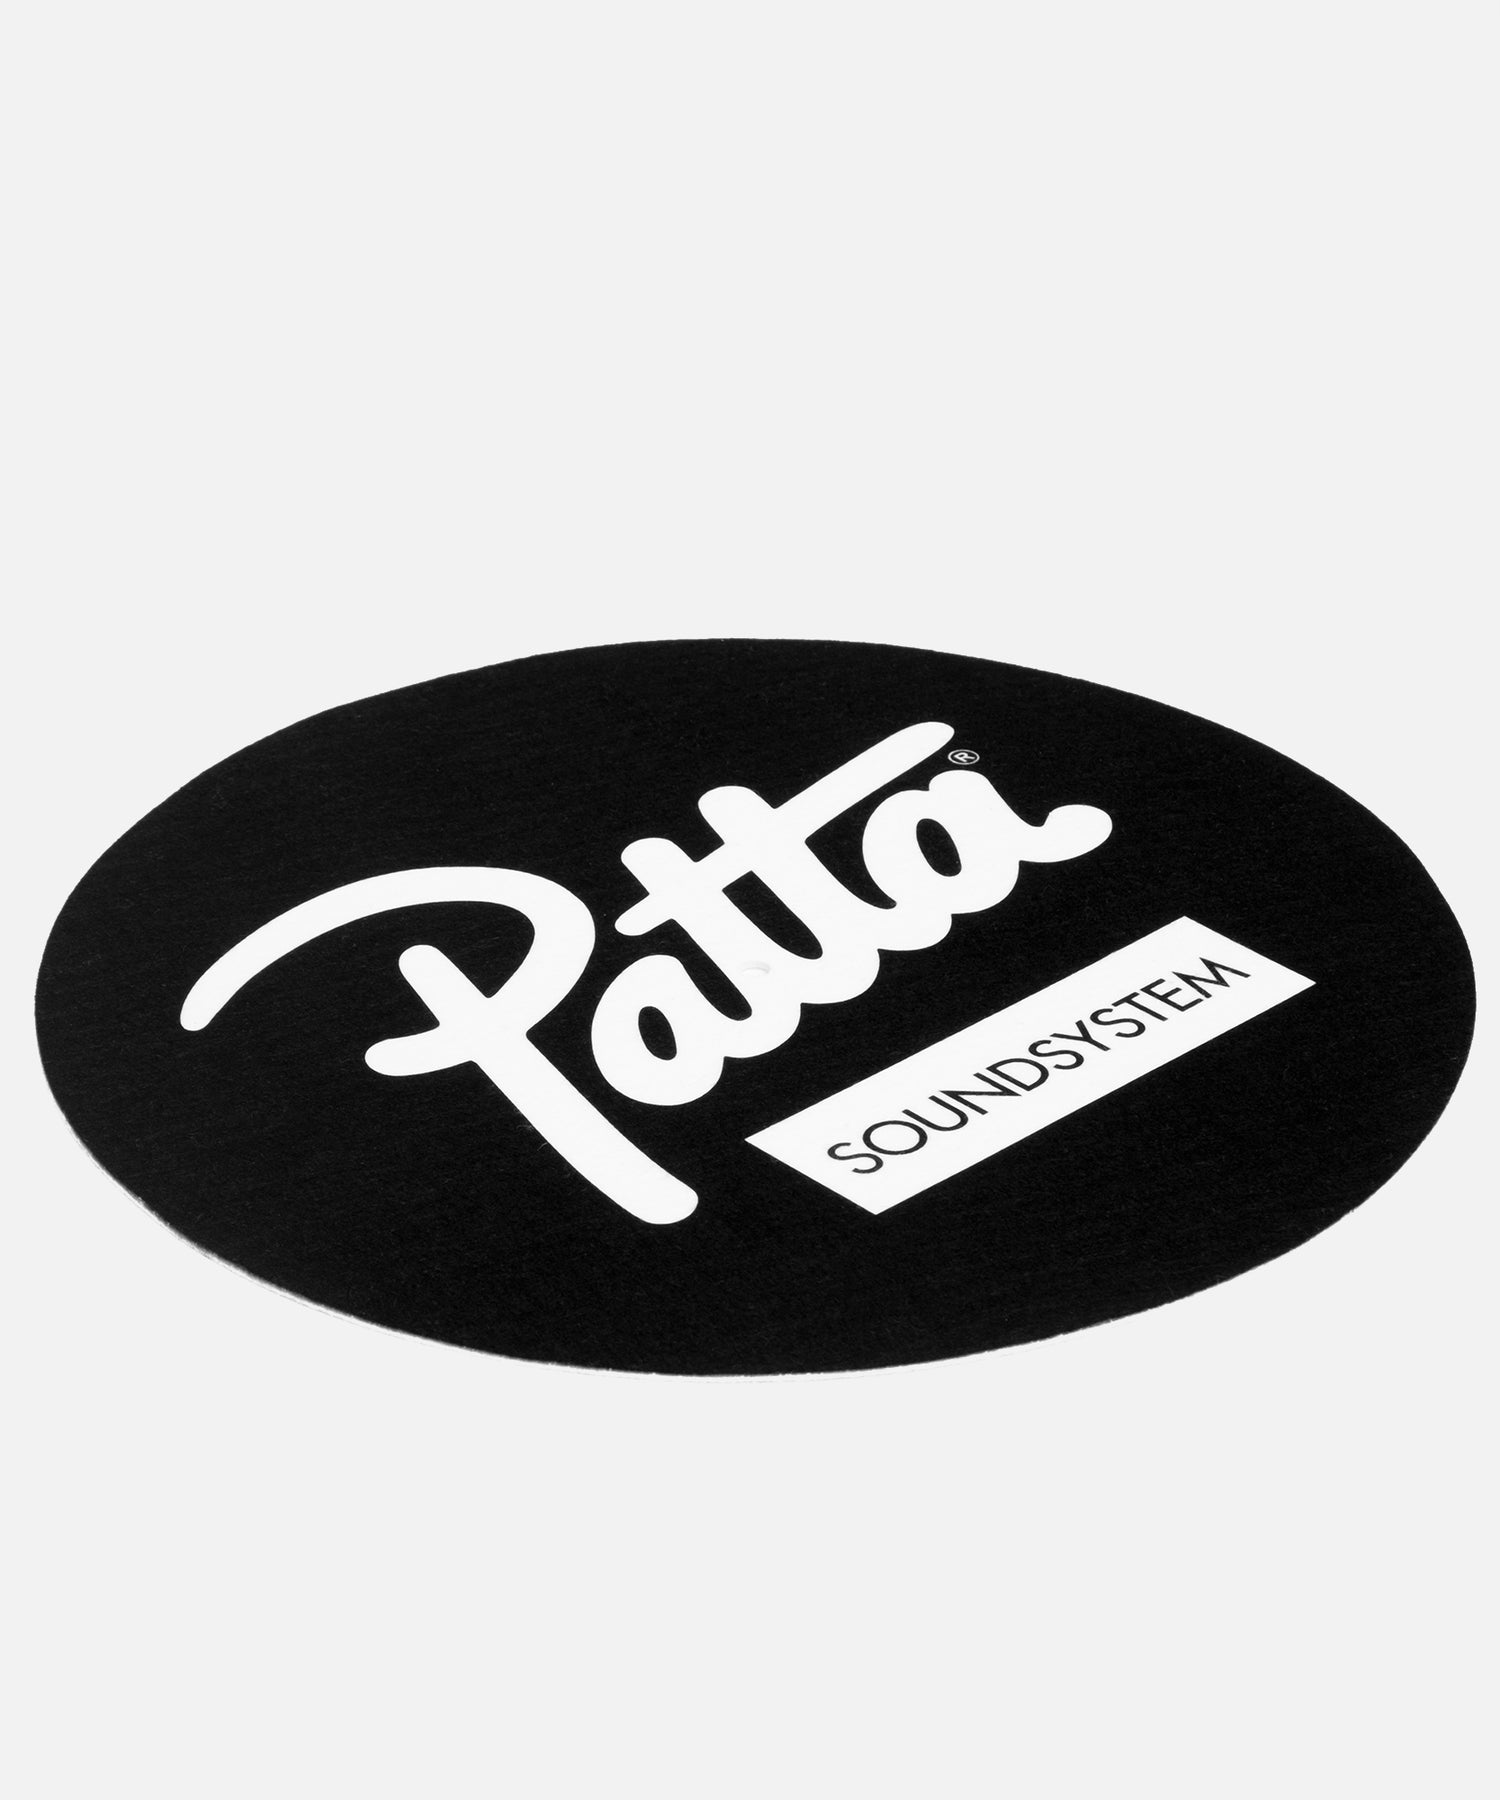 Tappetino antiscivolo per DJ Patta Soundsystem